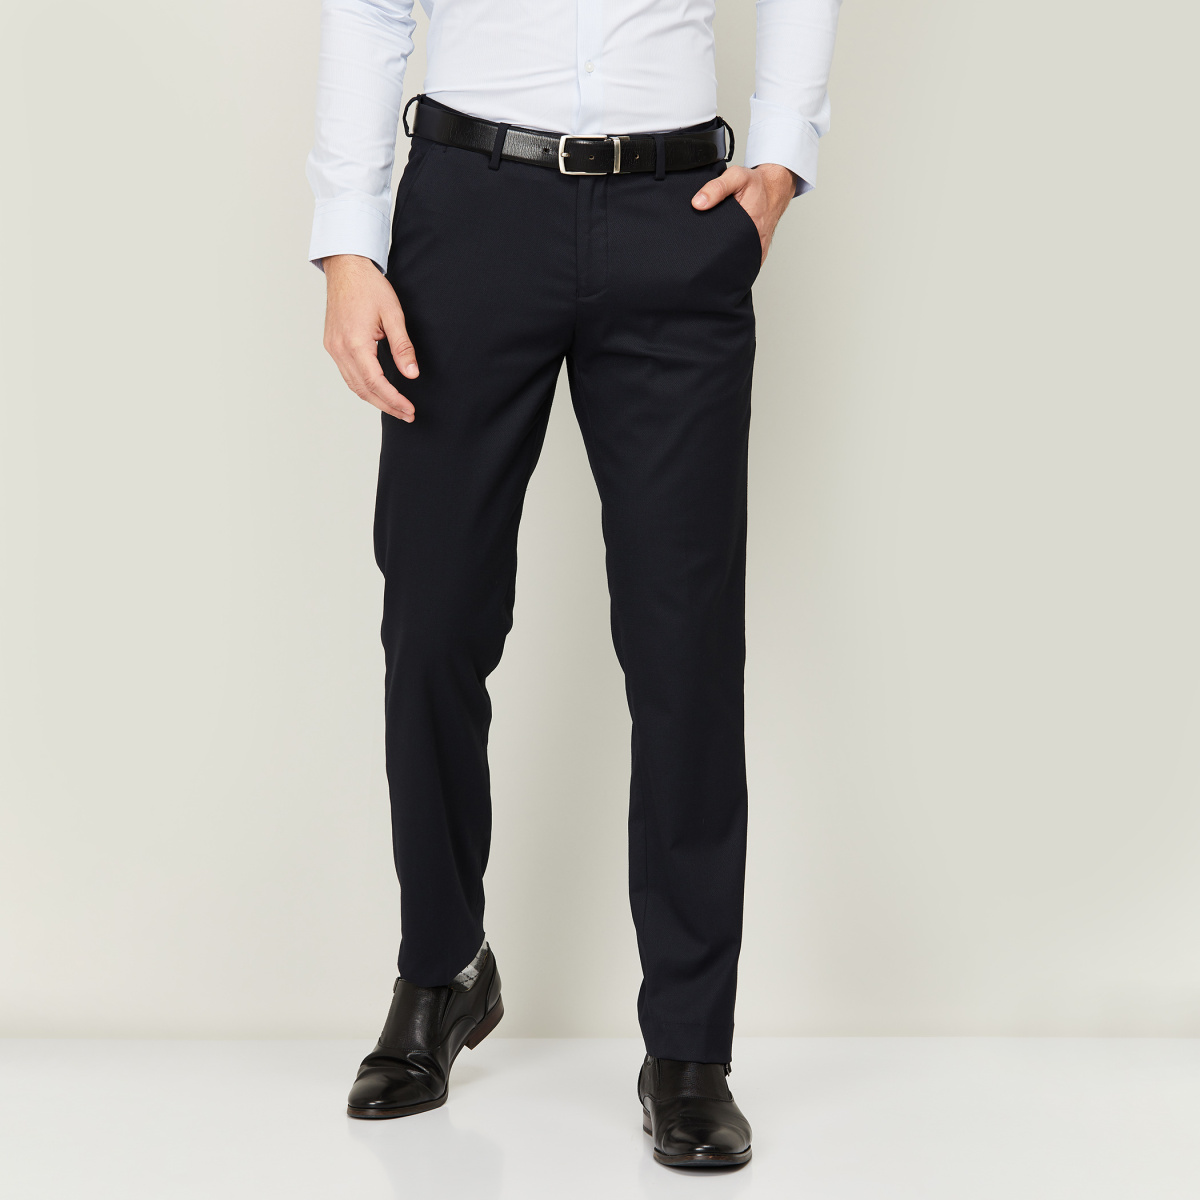 Buy Navy Trousers  Pants for Men by ARROW Online  Ajiocom